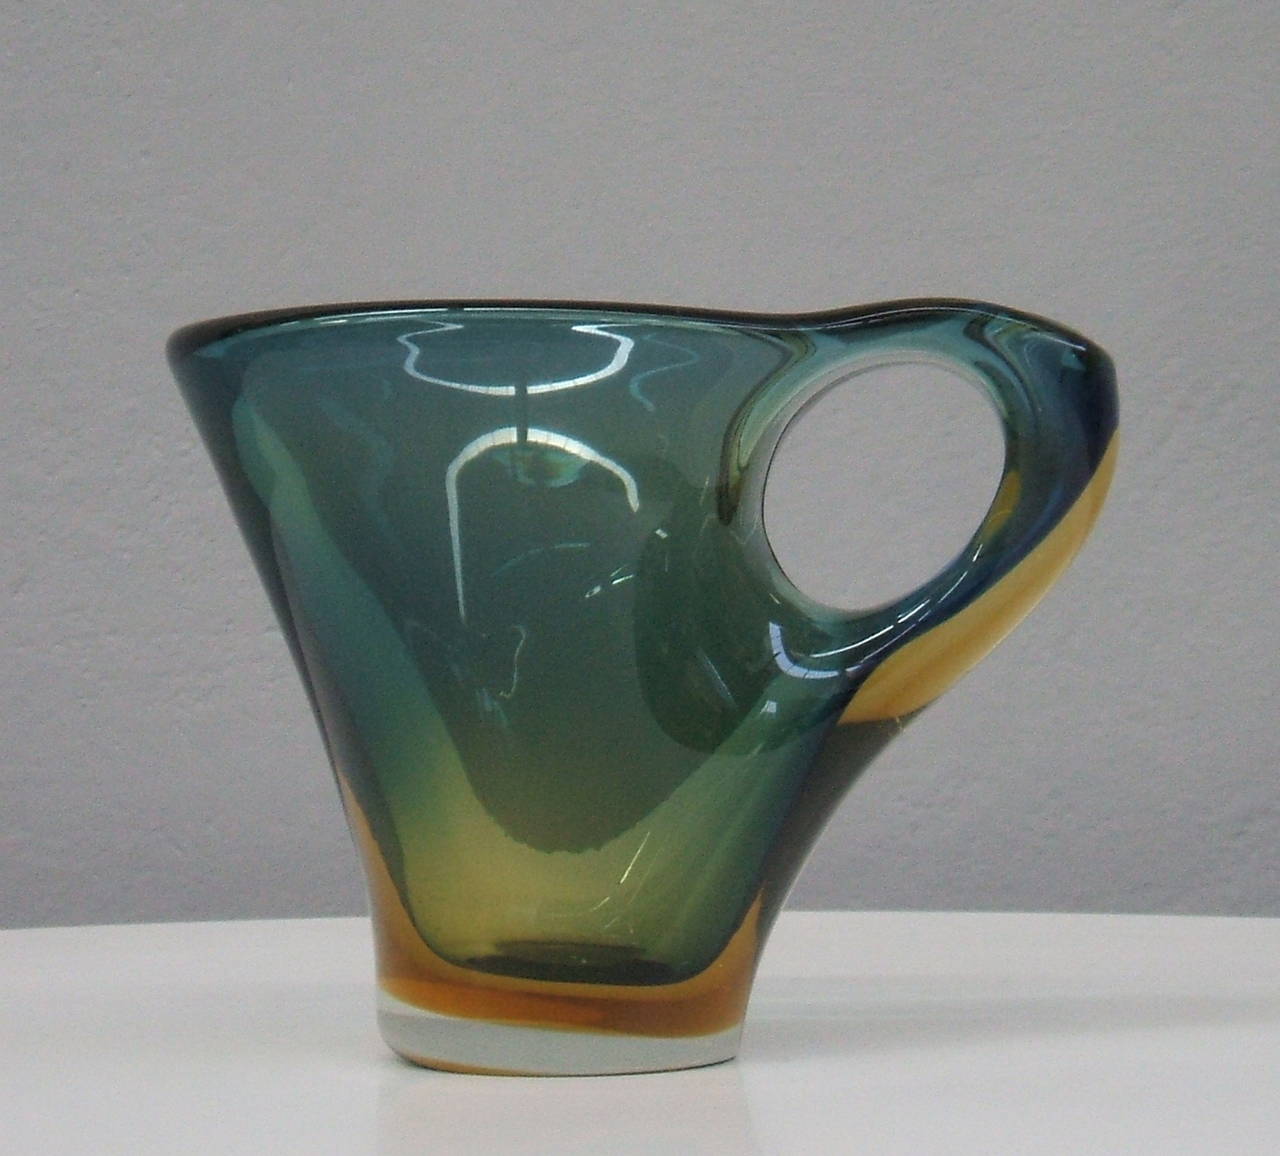 Handblown green and yellow glass pitcher.